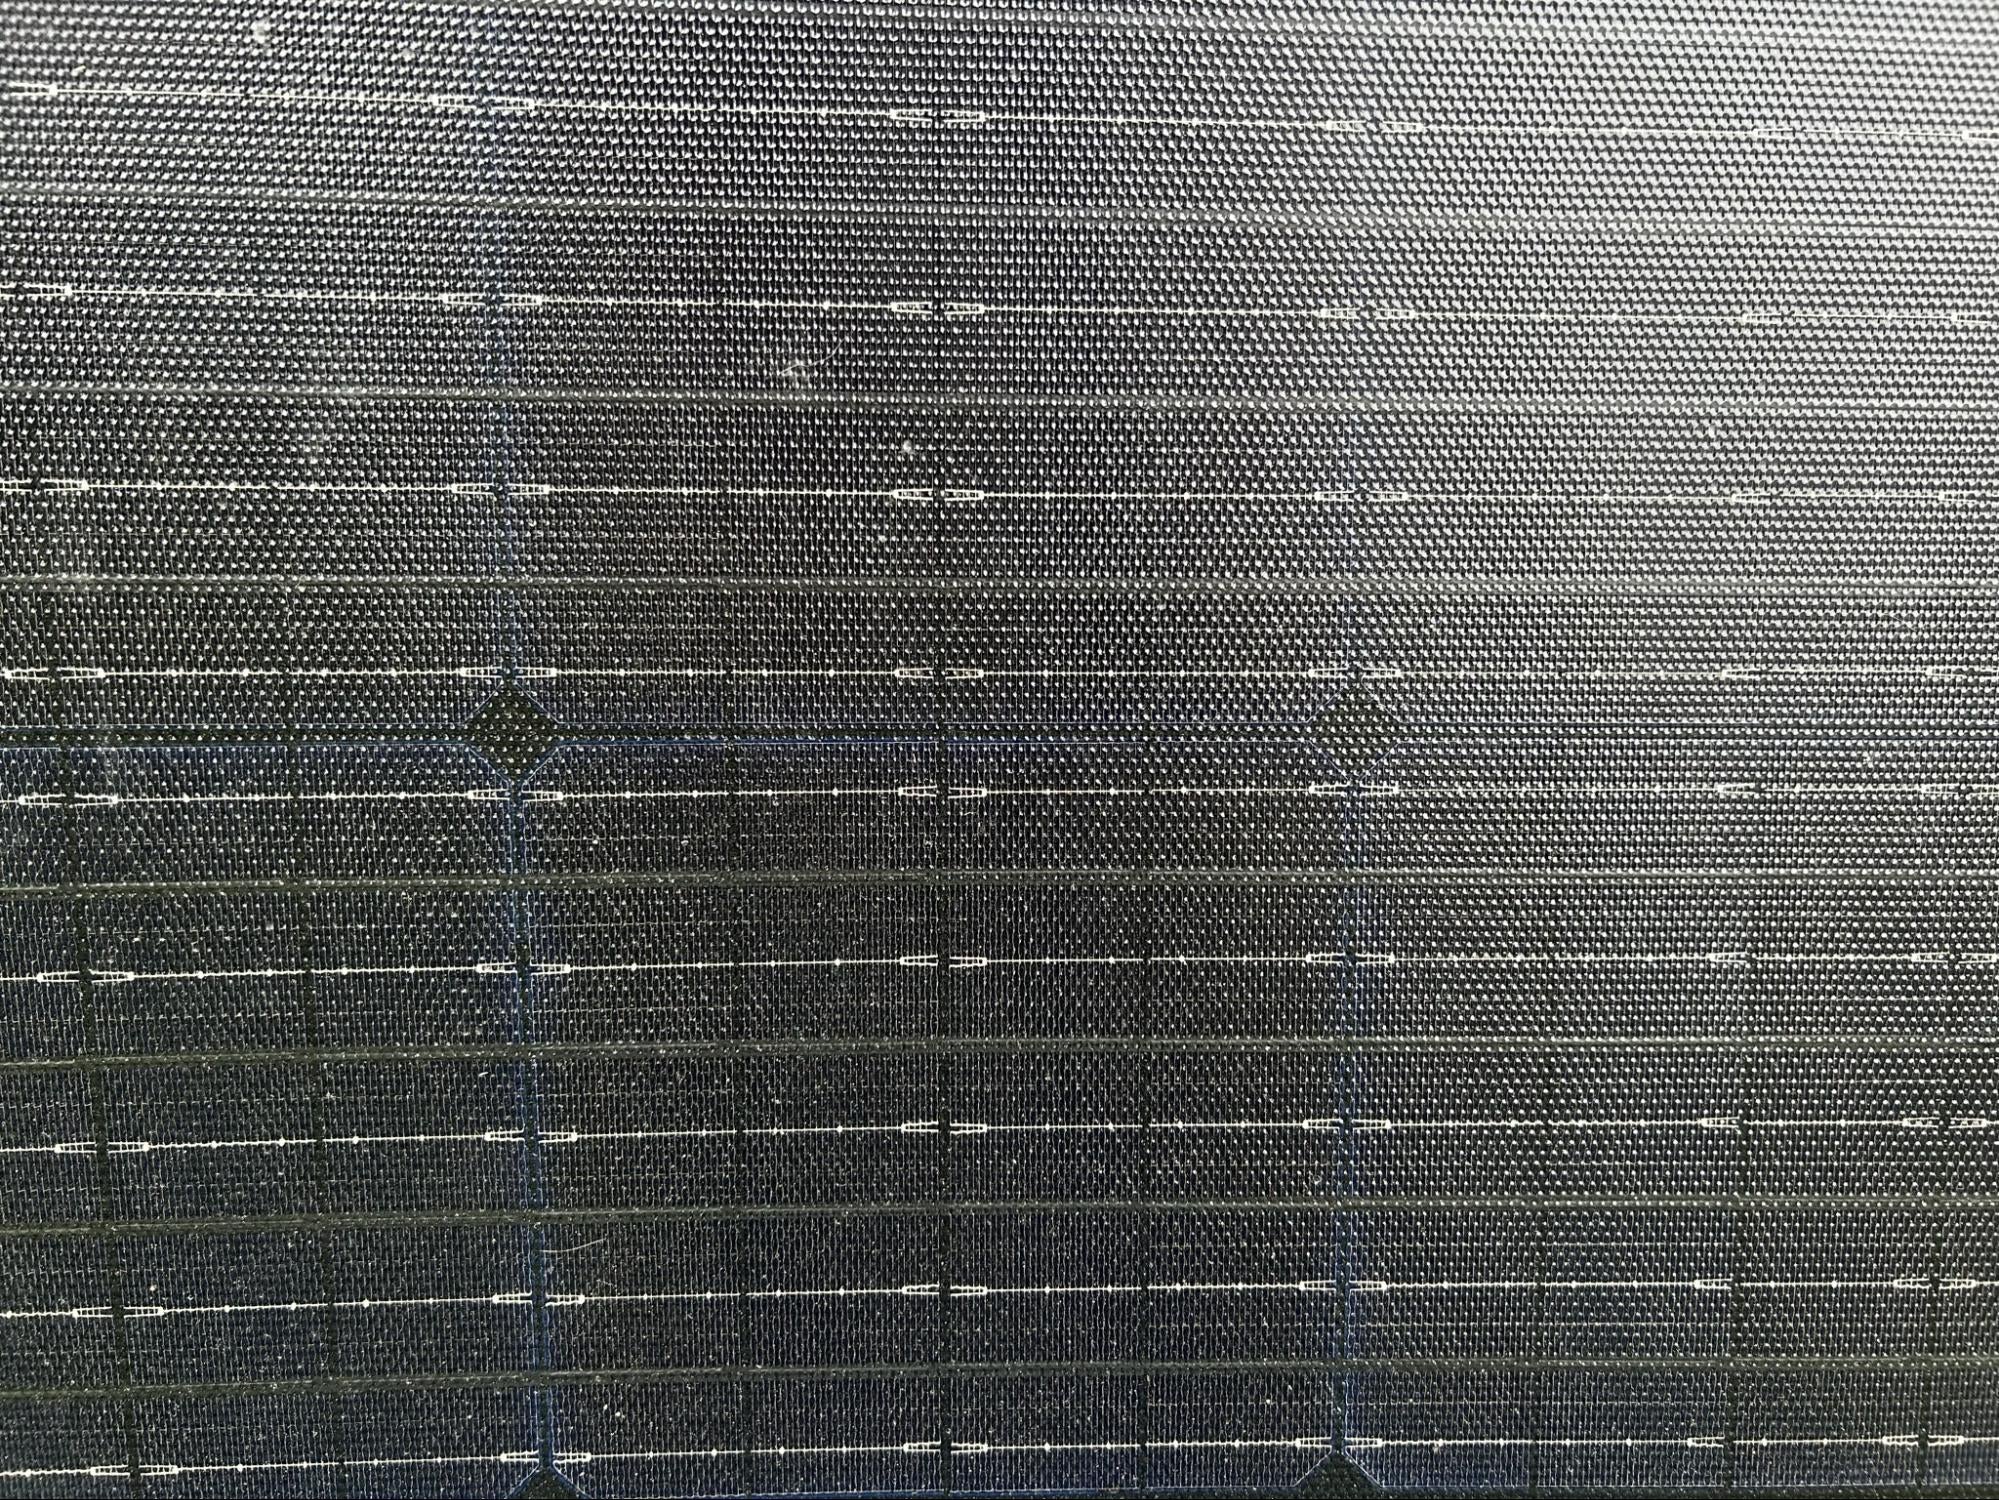 bluetti pv200 solar panel detail